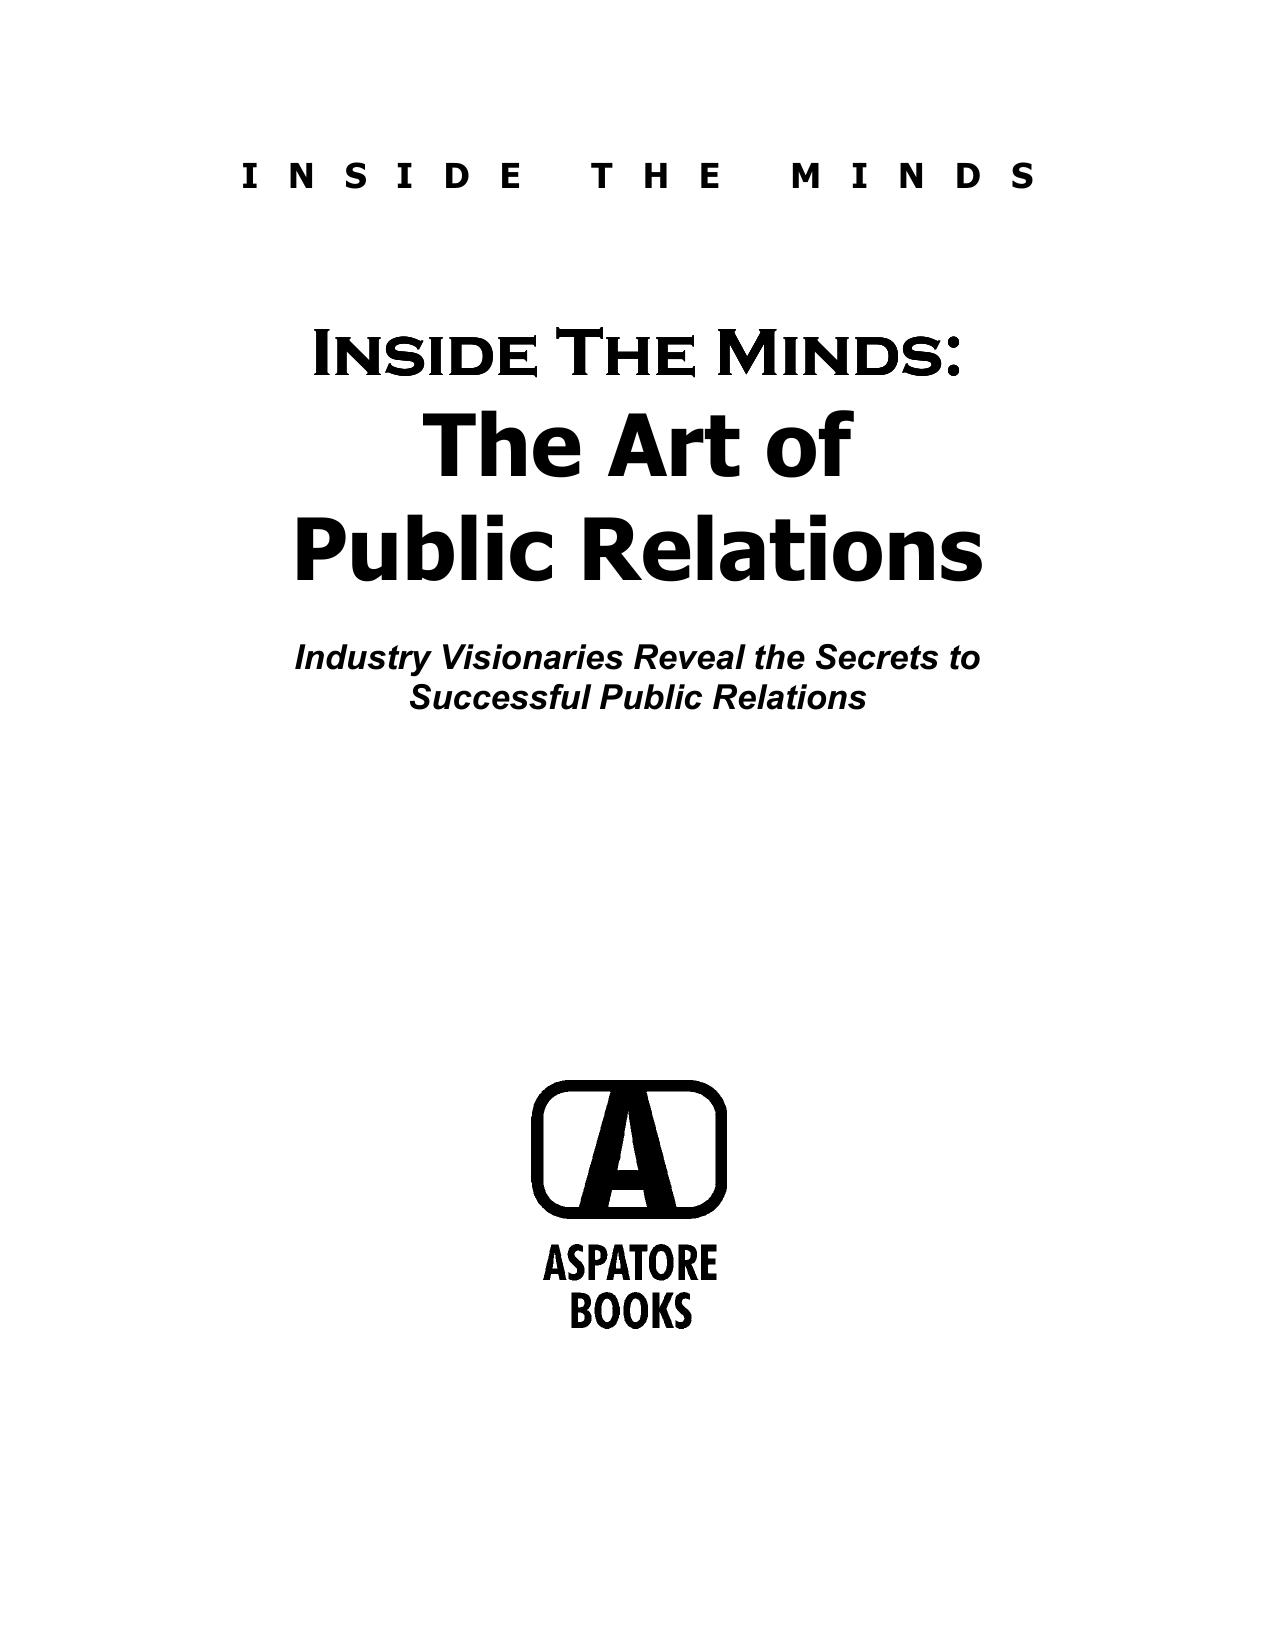 Richard Edelman, Christopher P.A. Komisarjevsky,et alThe Art of Public Relations 2001